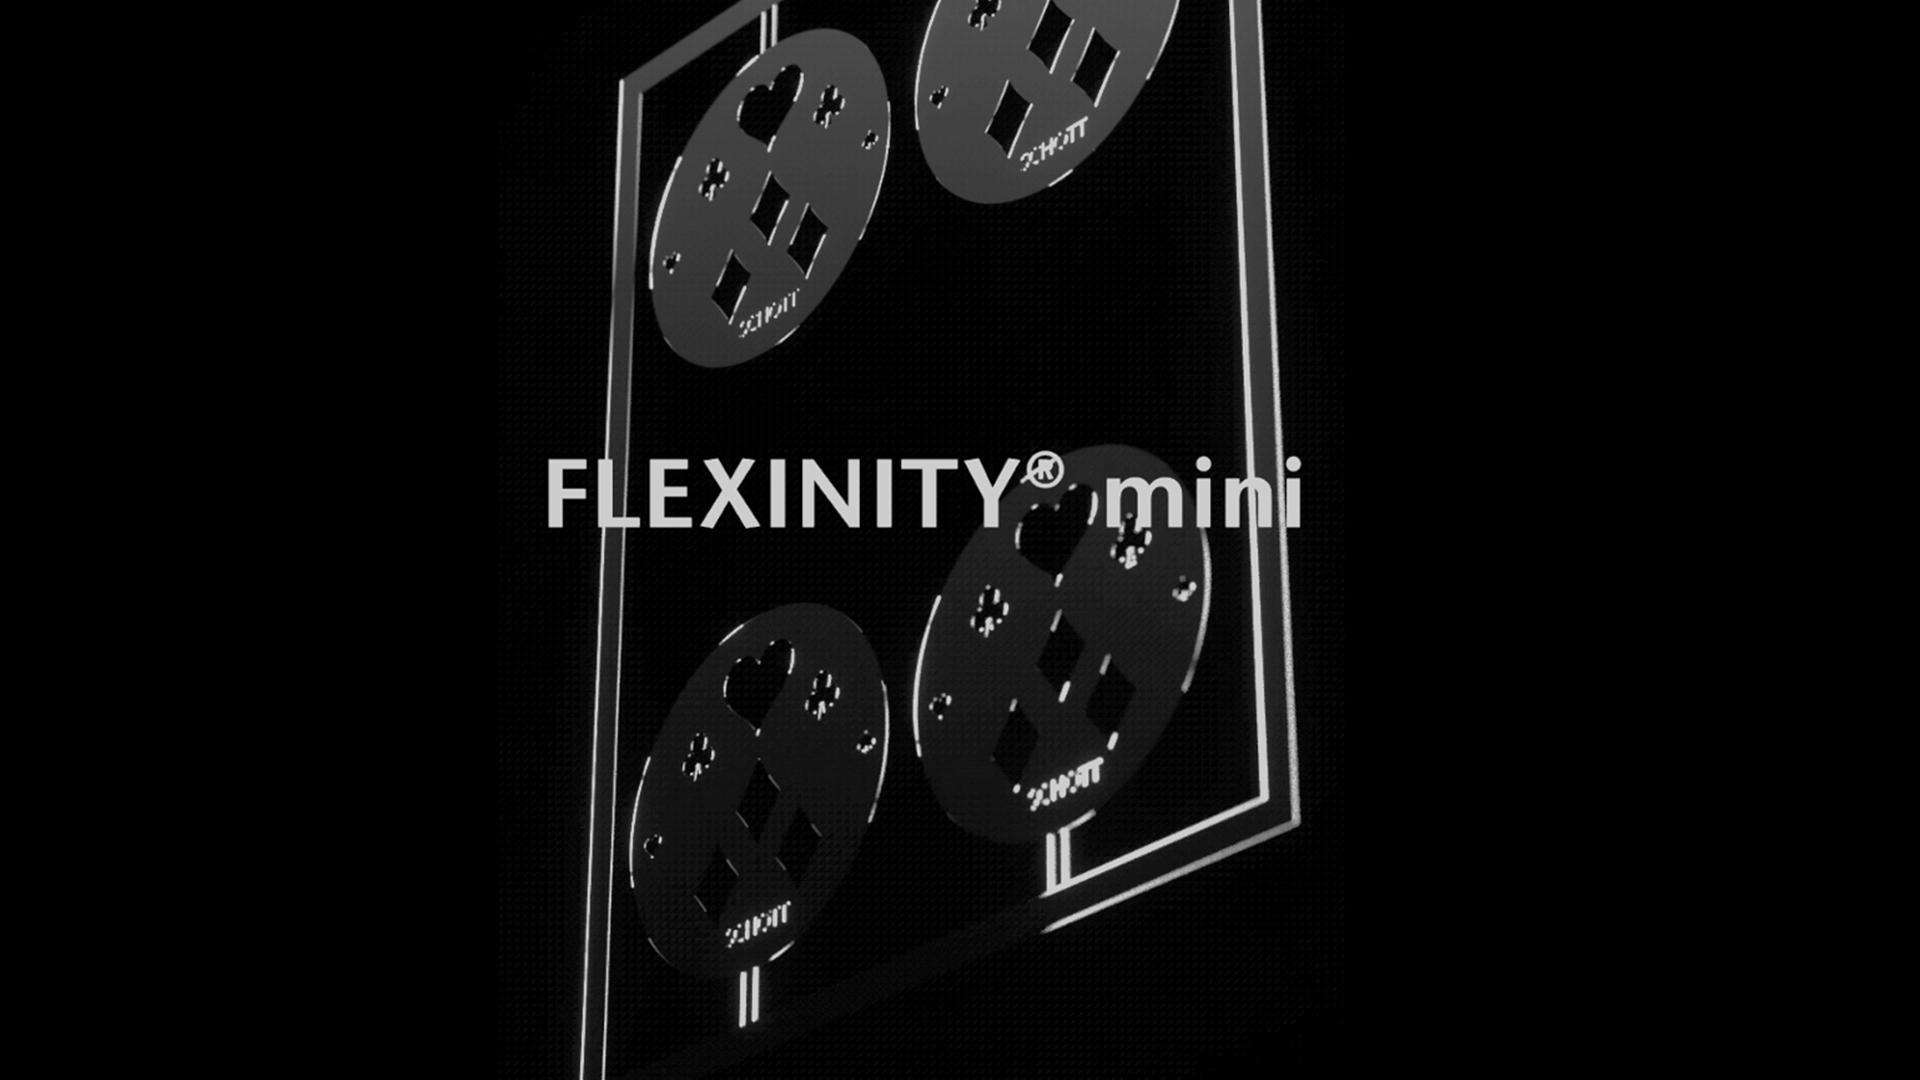 Descubre el ajuste perfecto gracias a FLEXINITY® mini.